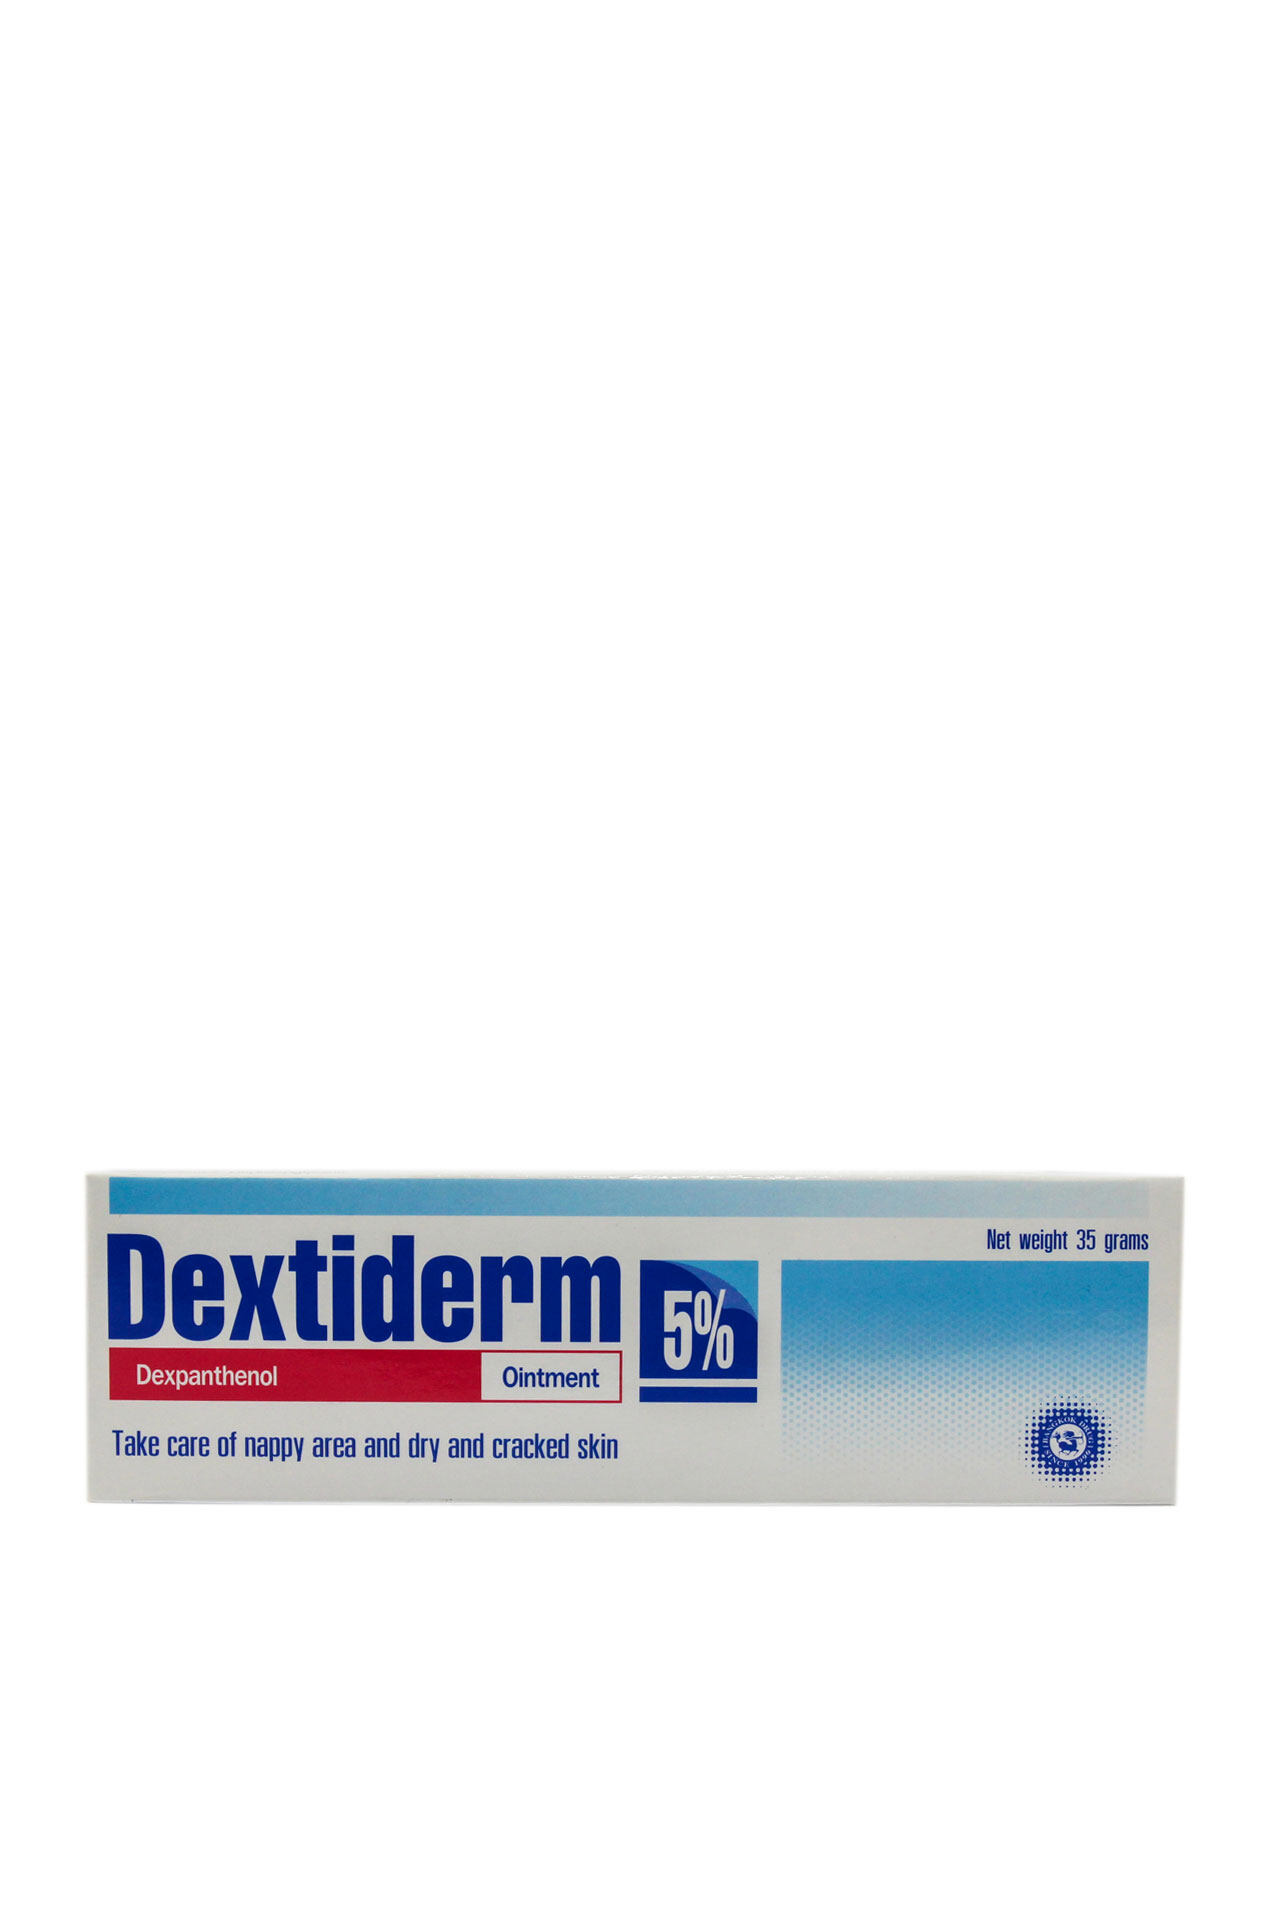 Dextiderm 5% เด็กซ์ติเดิร์ม ออยเมนท์ ผื่นผ้าอ้อม 35 g.